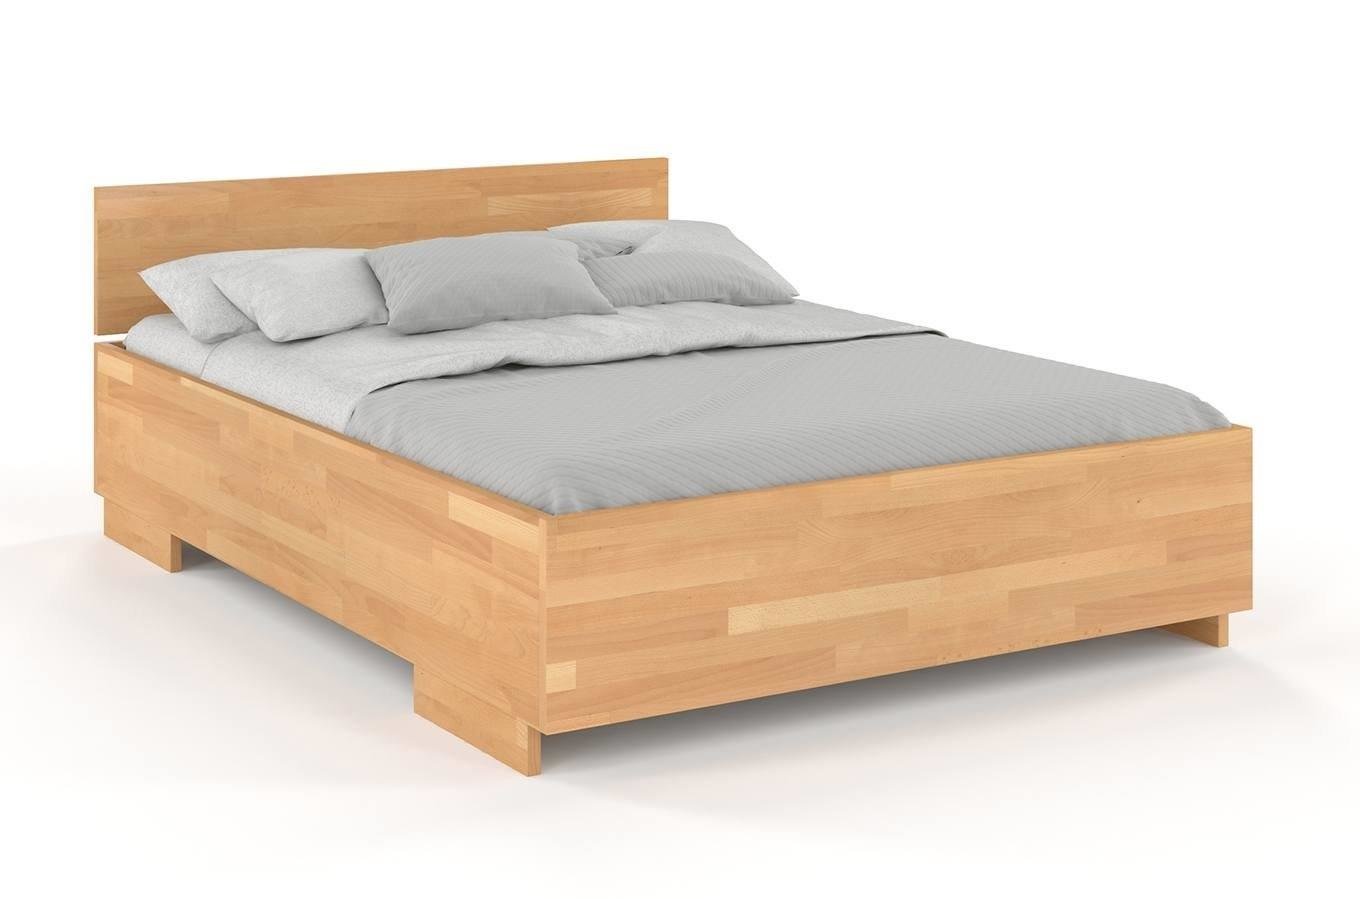 Łóżko drewniane bukowe Visby Bergman High&Long / 200x220 cm, kolor naturalny